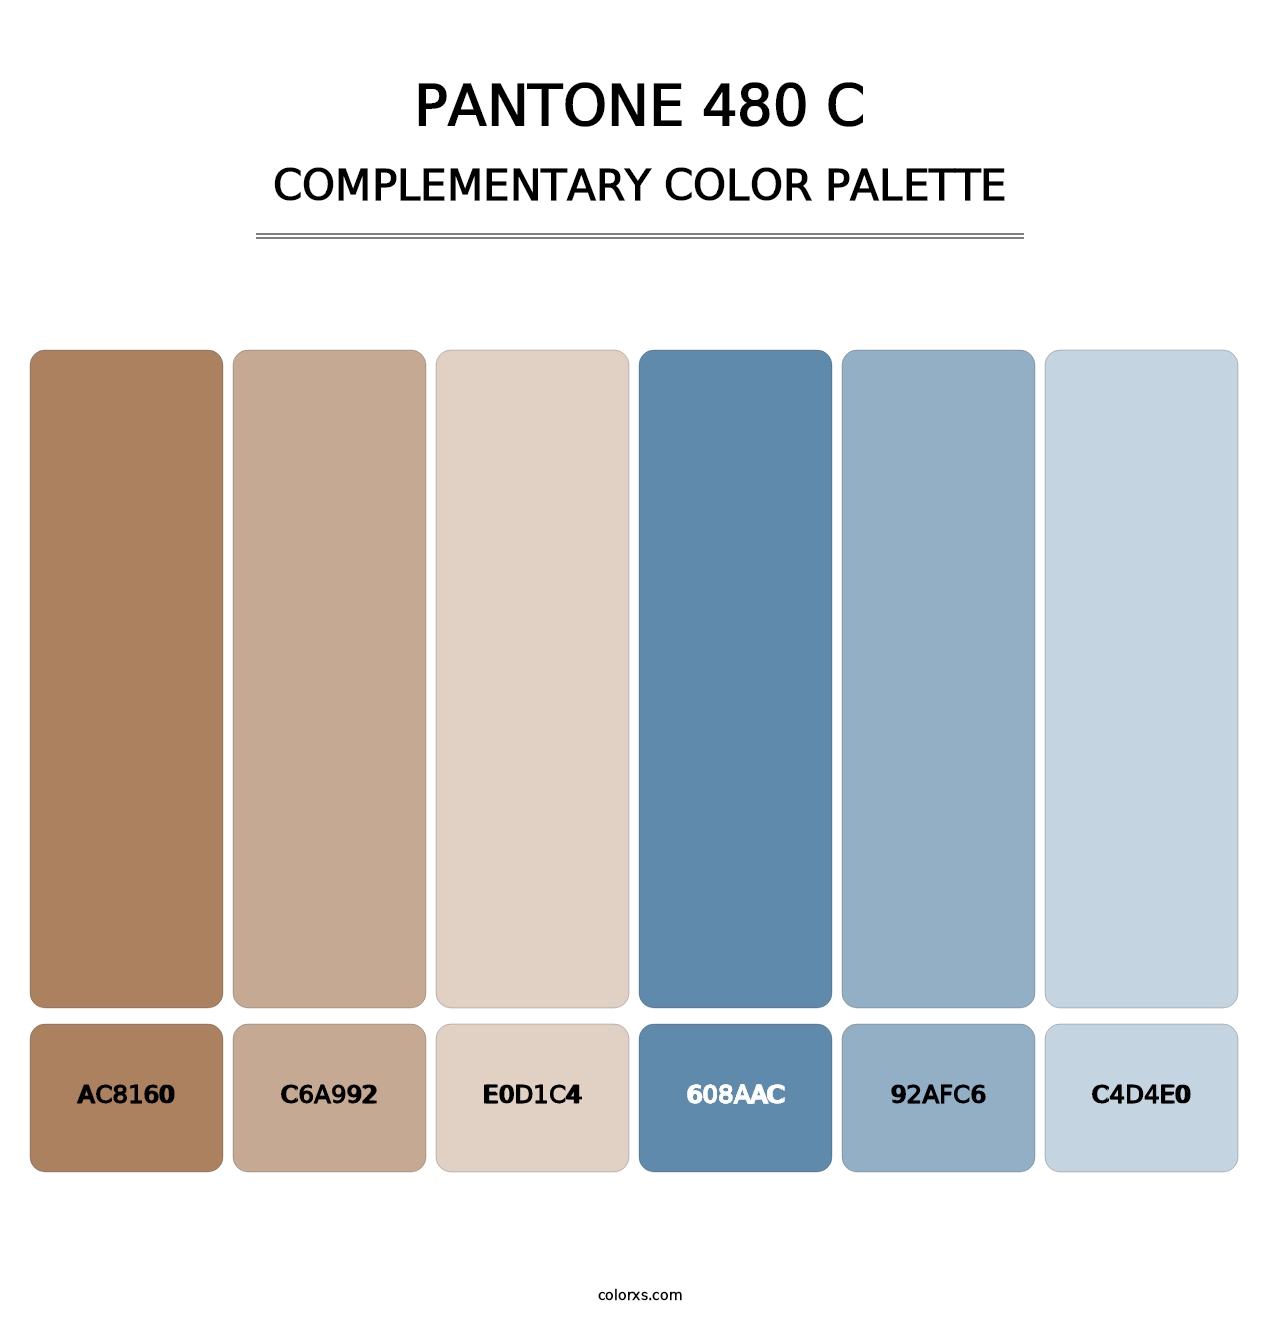 PANTONE 480 C - Complementary Color Palette